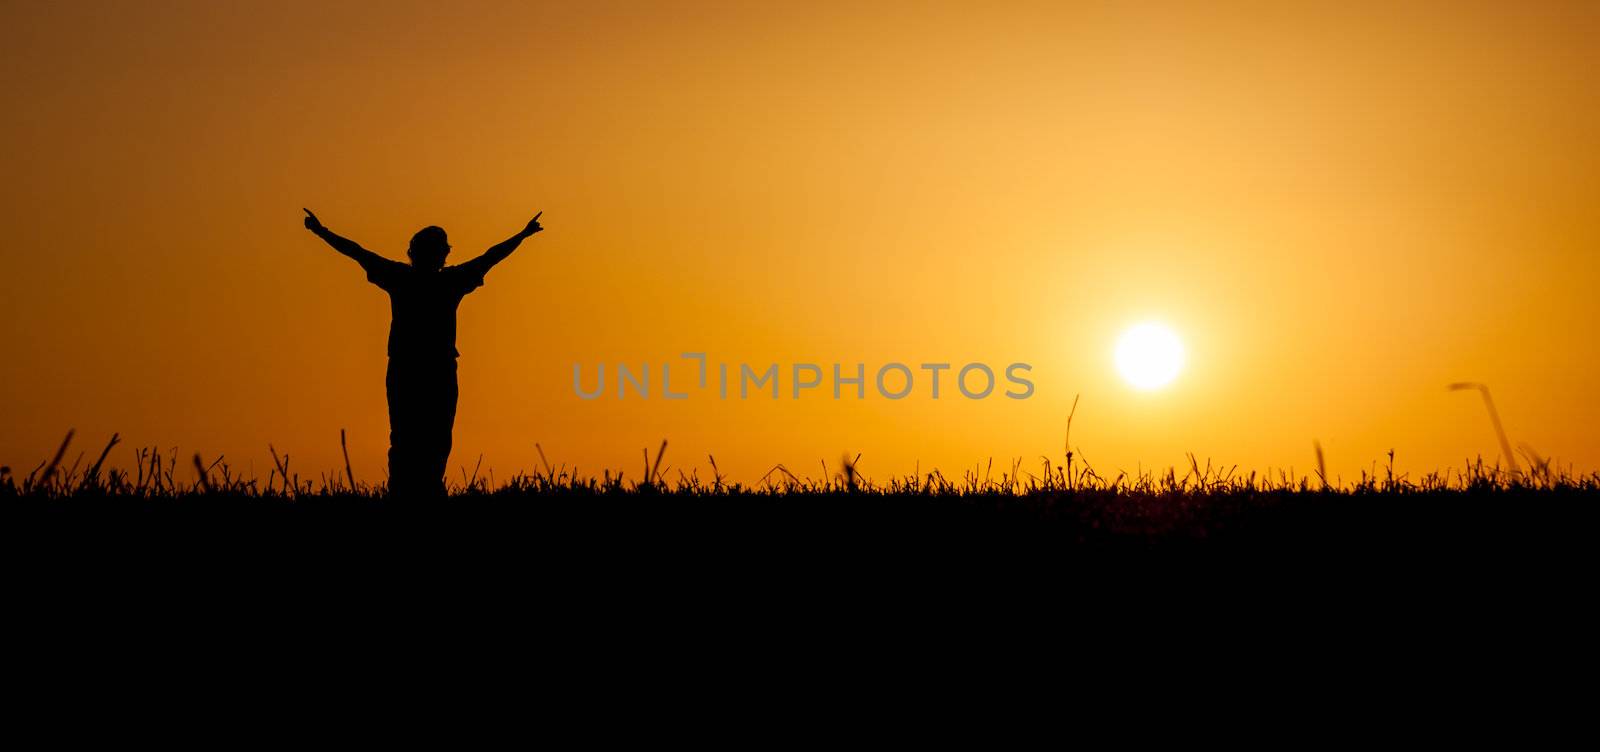 Person celebrating life at sunset by Jaykayl